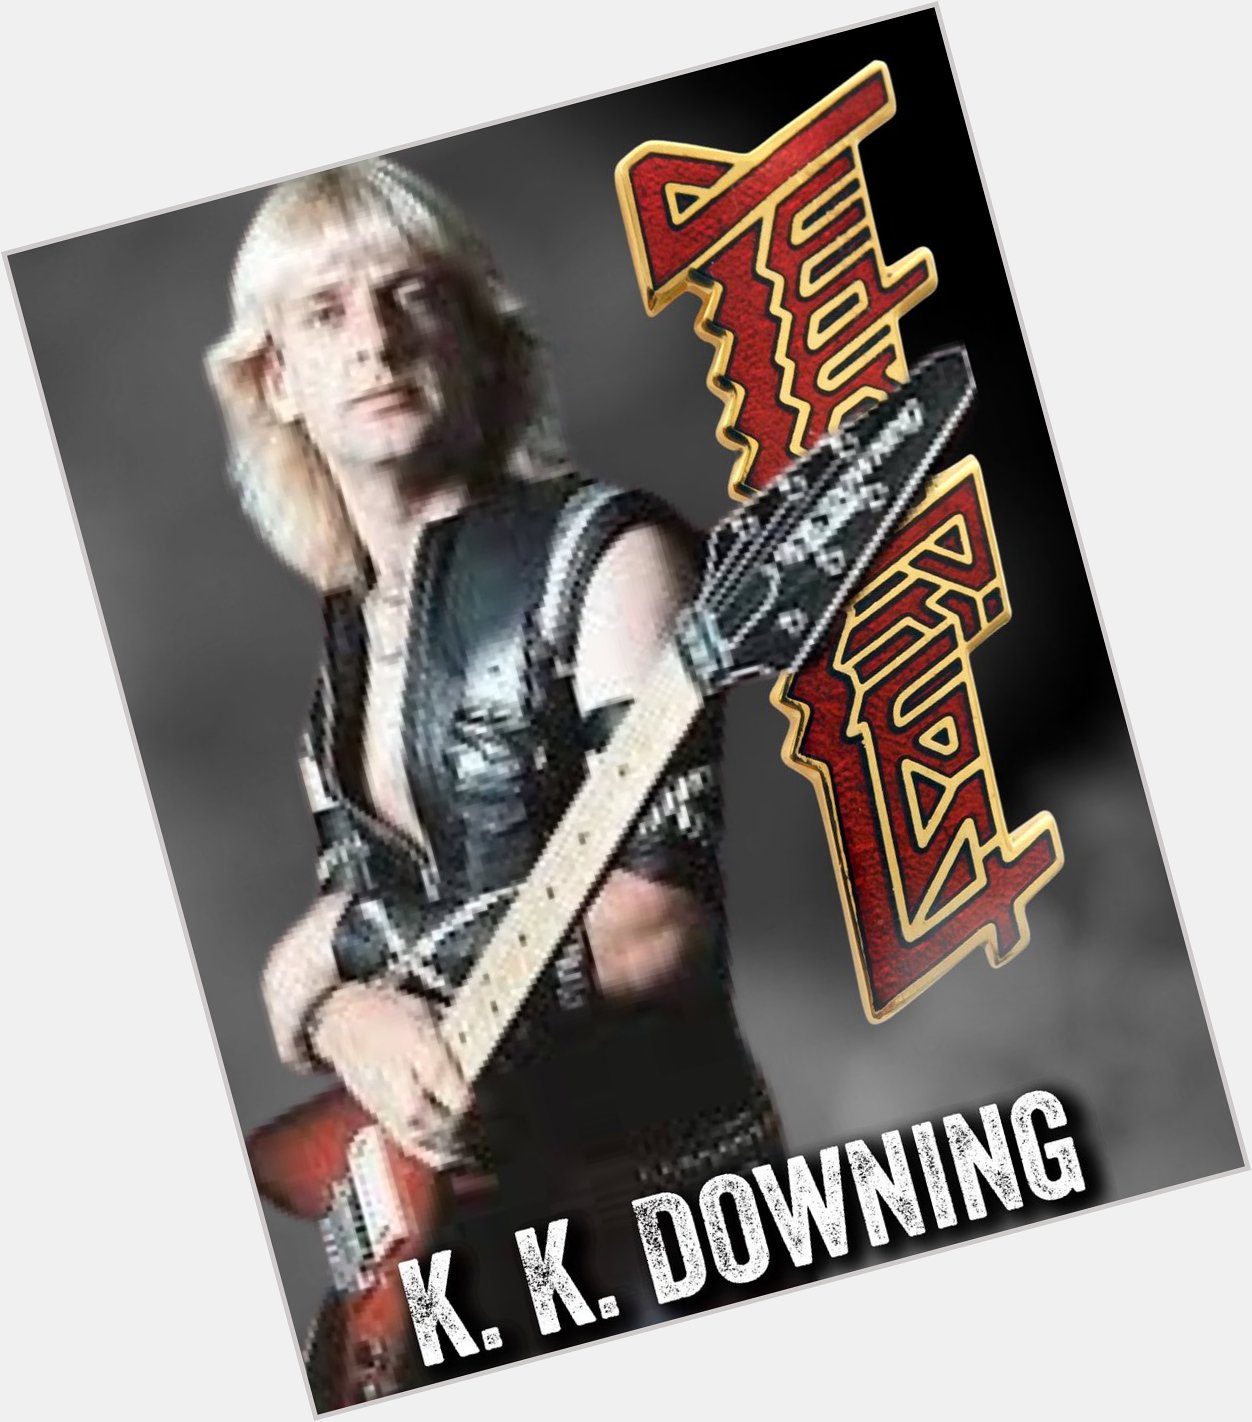 Happy 71st Birthday K.K. Downing
Guitarist for Judas Priest 
October 27, 1951 
West Bromwich, United Kingdom 